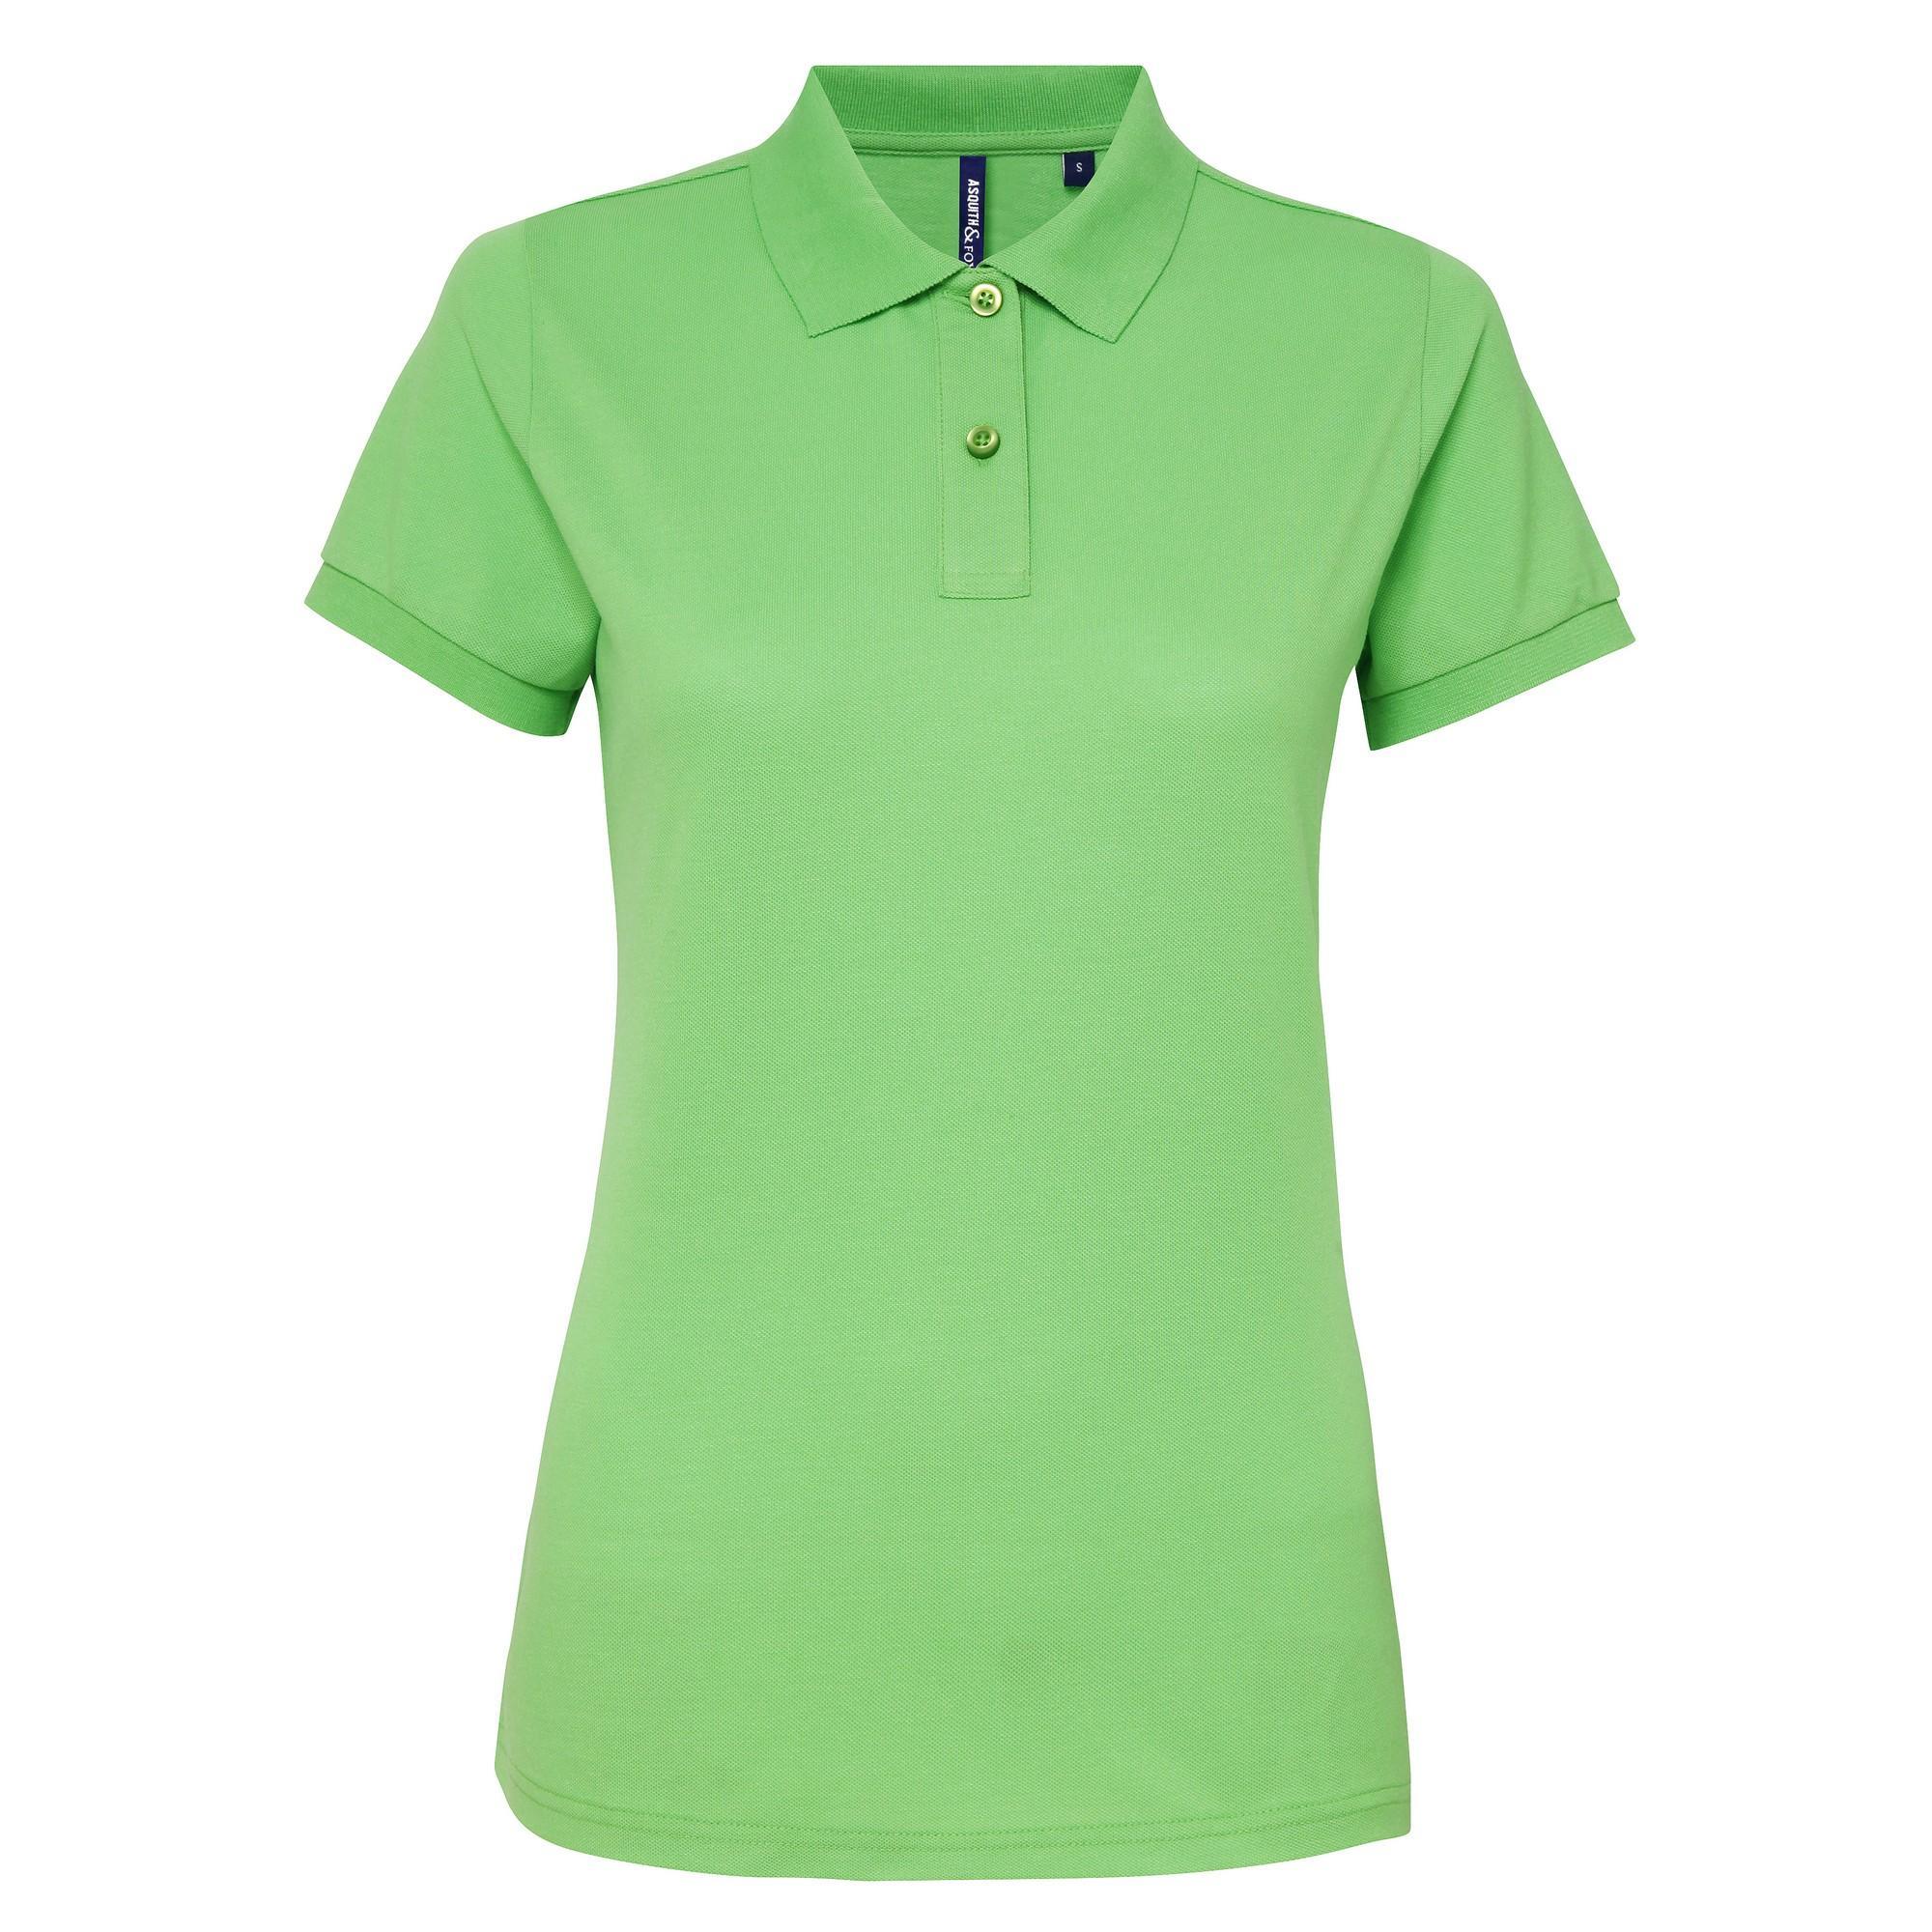 Asquith & Fox Womens/Ladies Short Sleeve Performance Blend Polo Shirt (Lime) (M)